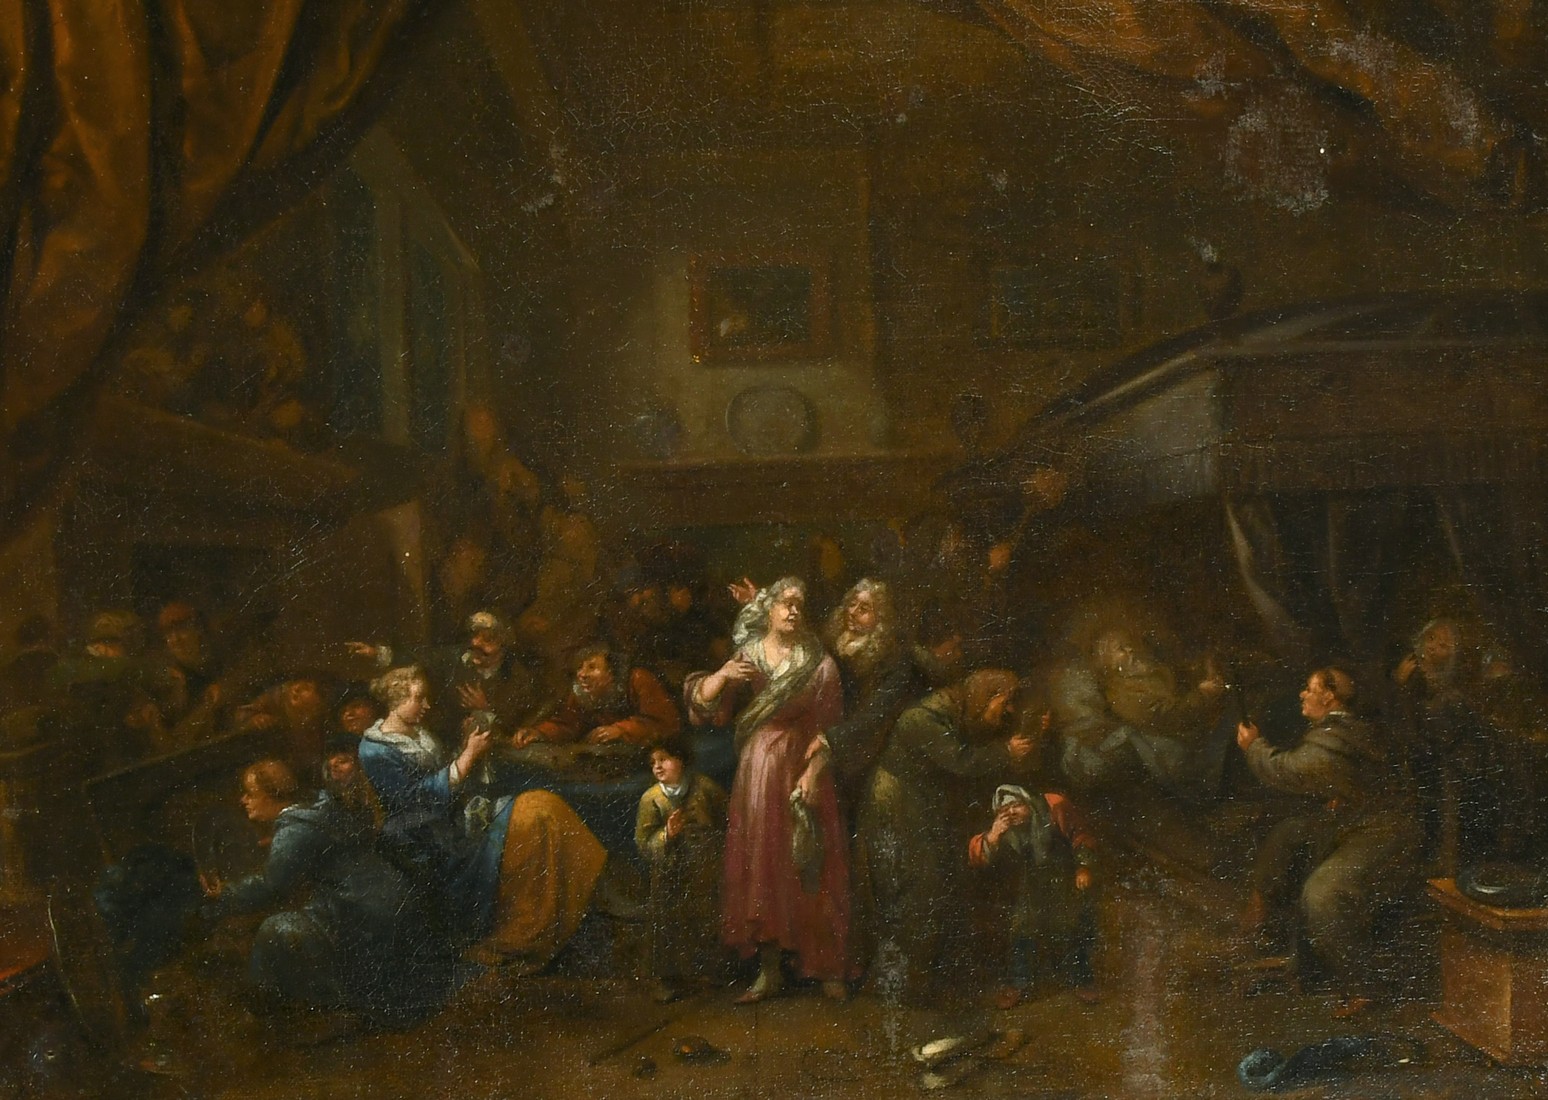 17th/18th Century Flemish School, figures gathered in a lavish interior, oil on canvas, 18.5" x 25",